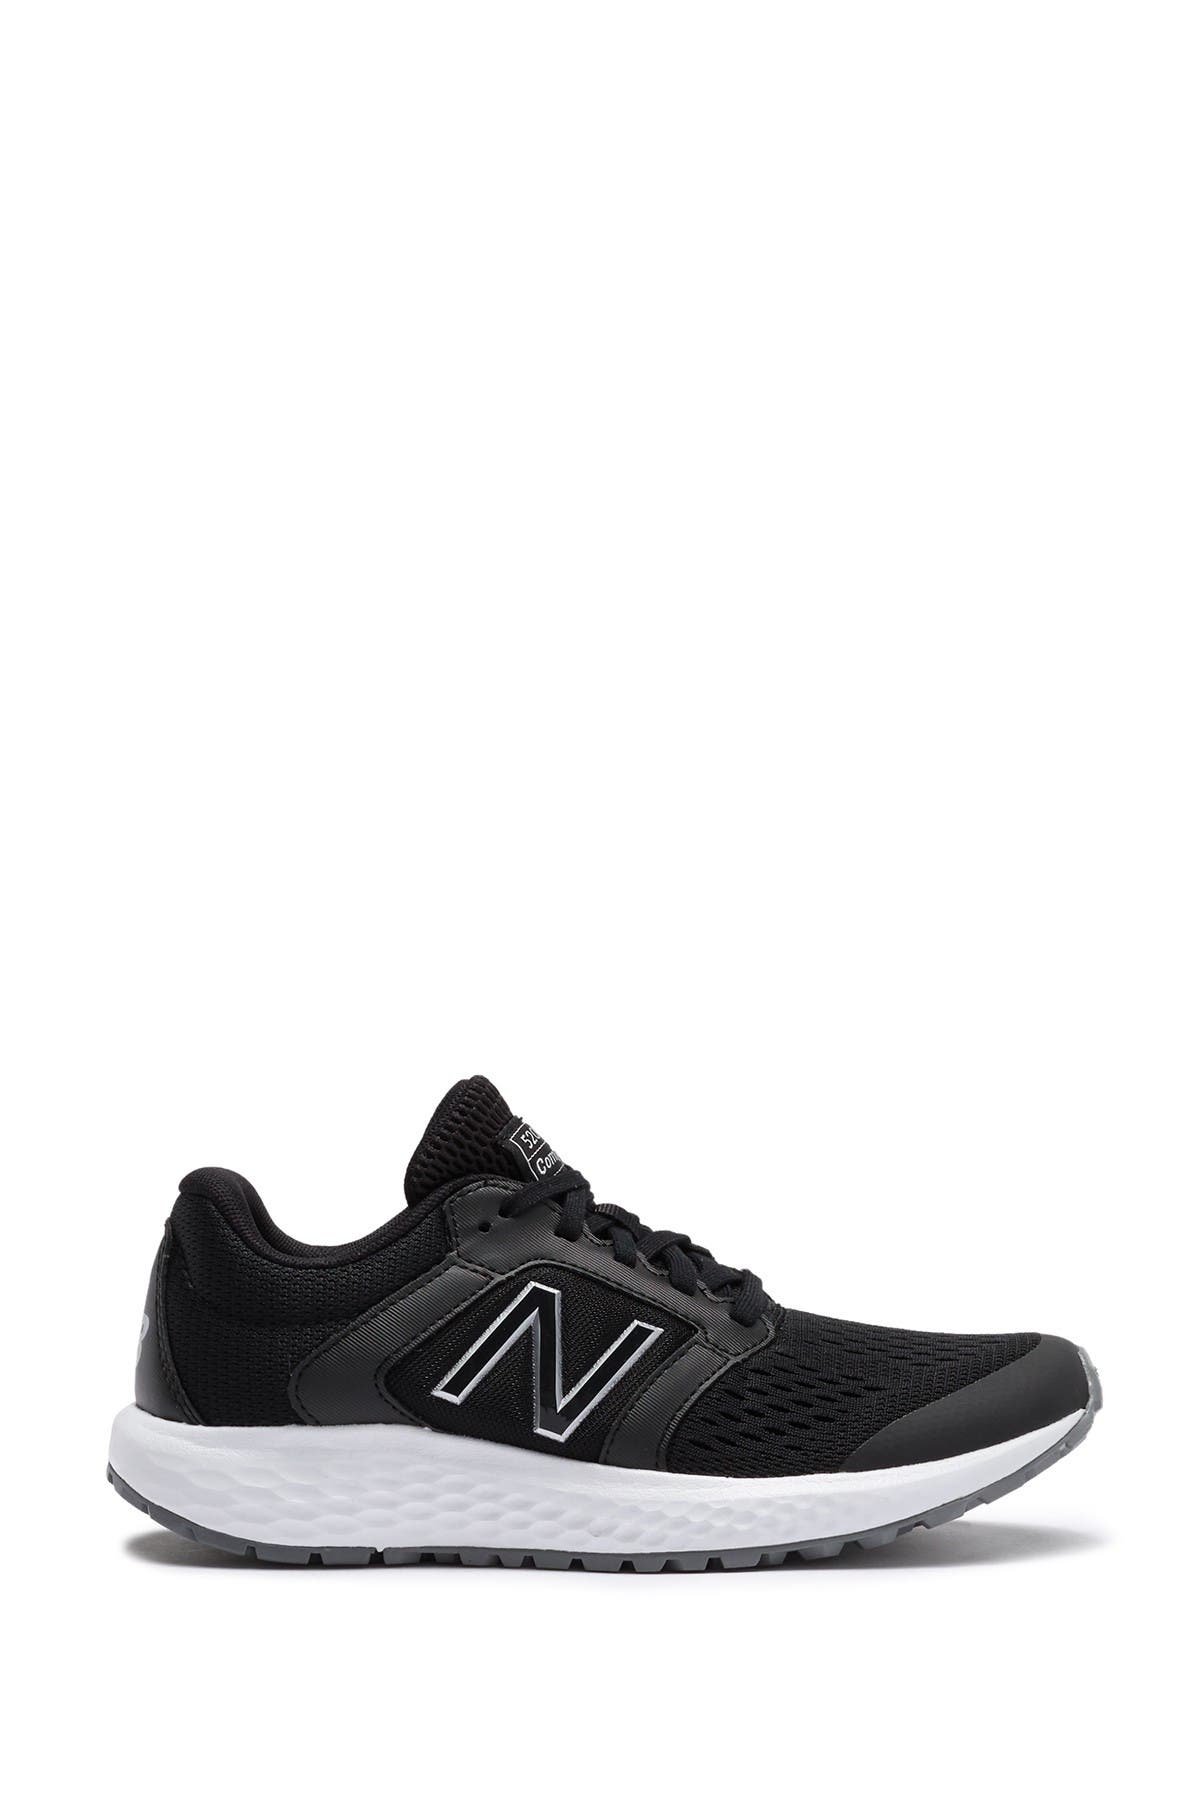 New Balance | 520 Comfort Ride Athletic Sneaker | Nordstrom Rack